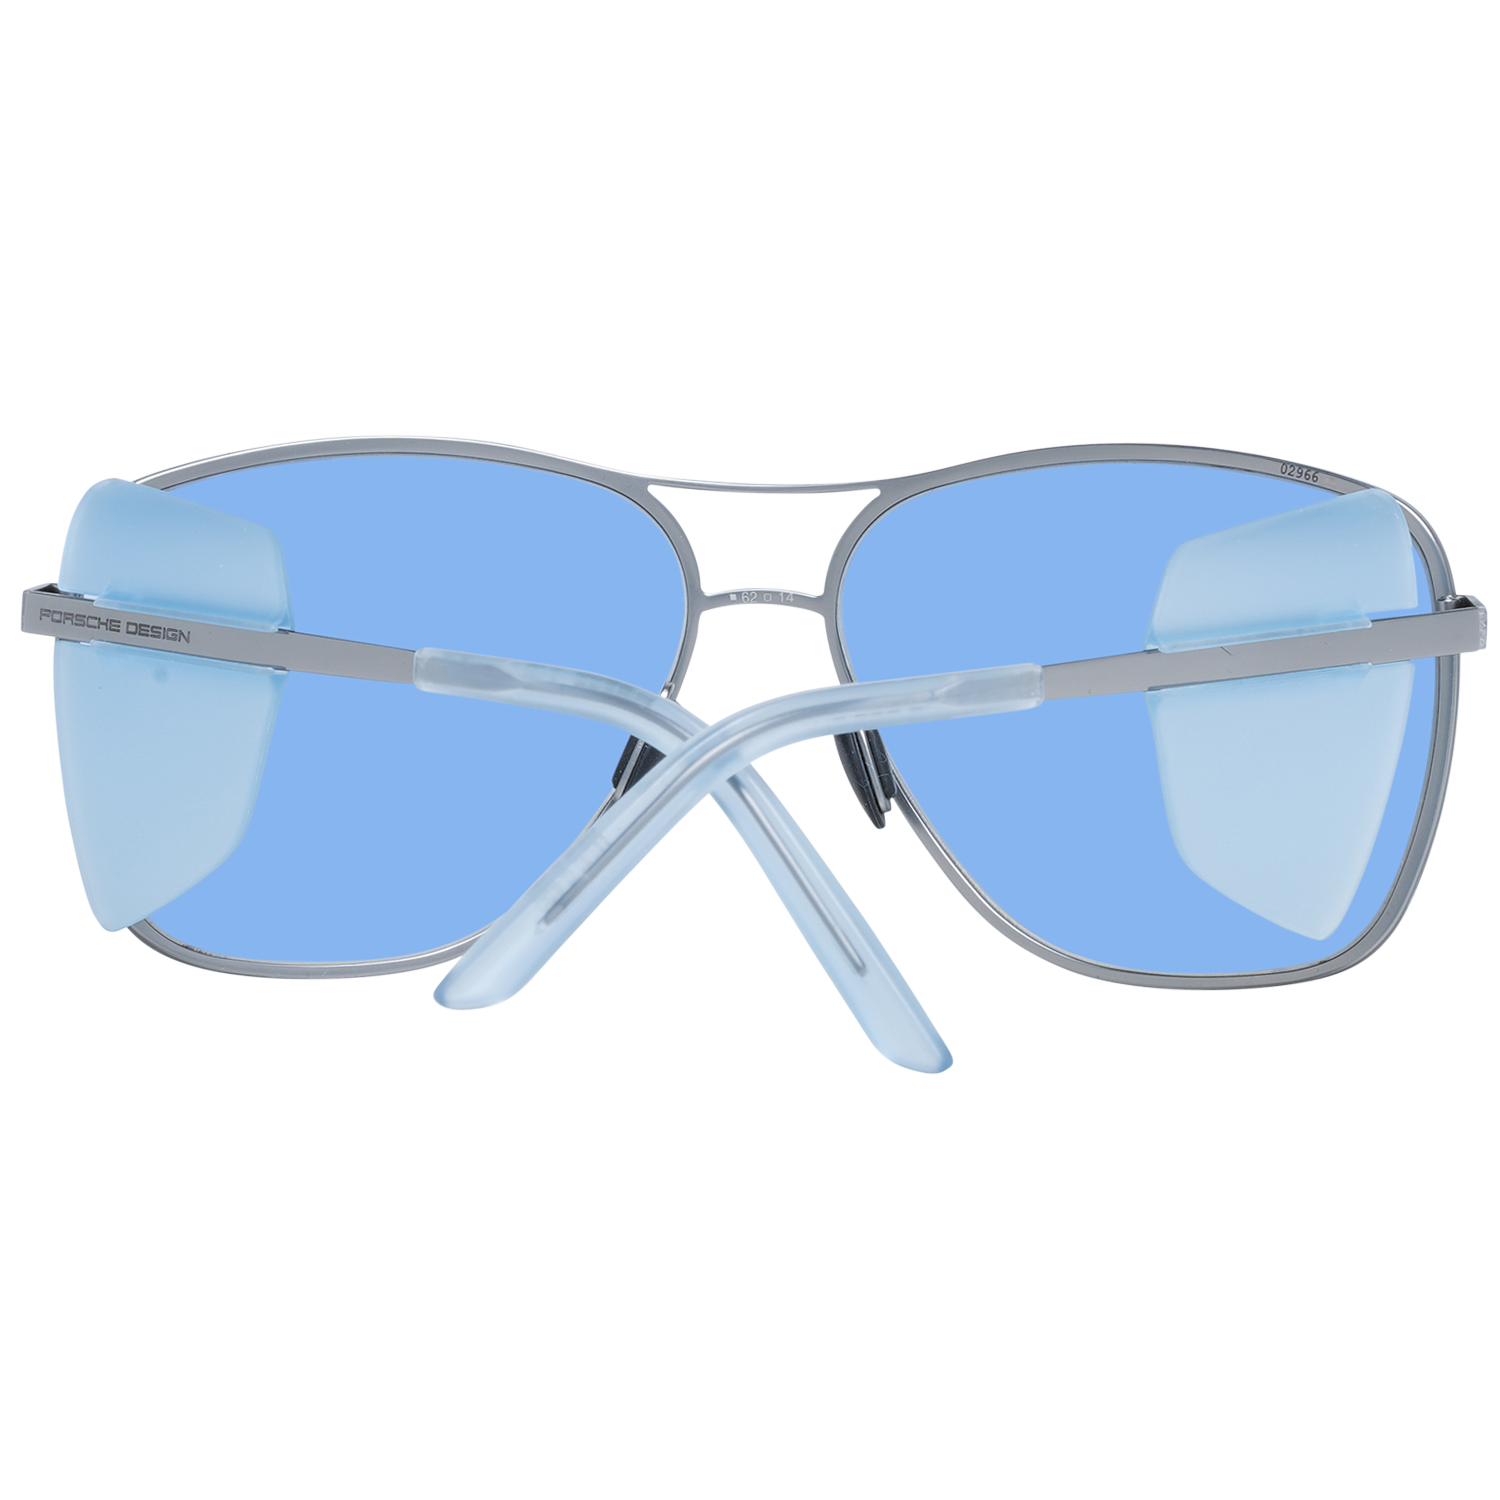 Porsche Design Sunglasses Porsche Design Sunglasses P8600 C 62 Titanium Eyeglasses Eyewear UK USA Australia 